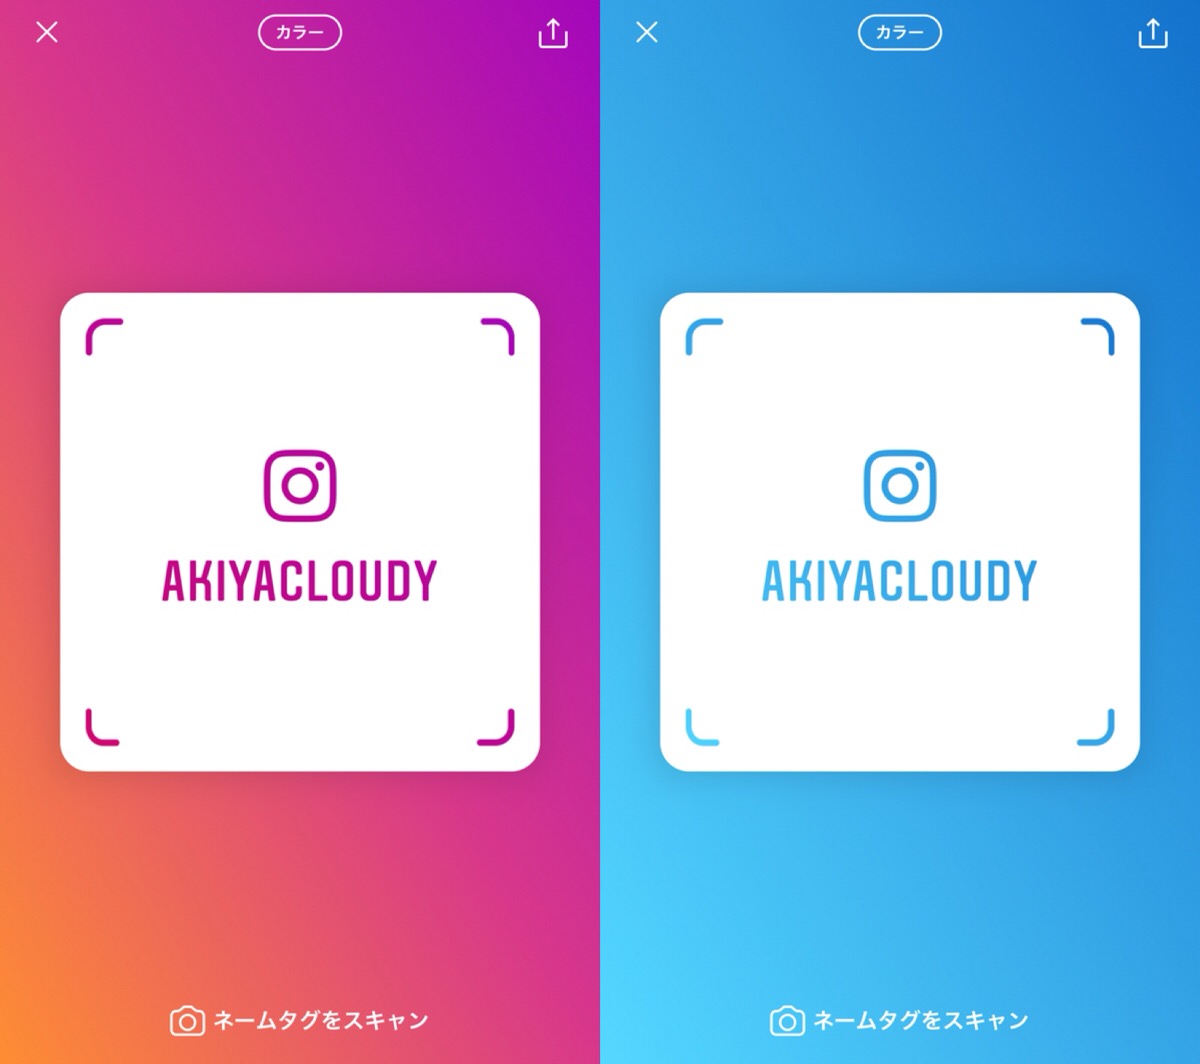 Instagram 簡単にインスタのアカウントが伝えられる ネームタグとは Apptopi